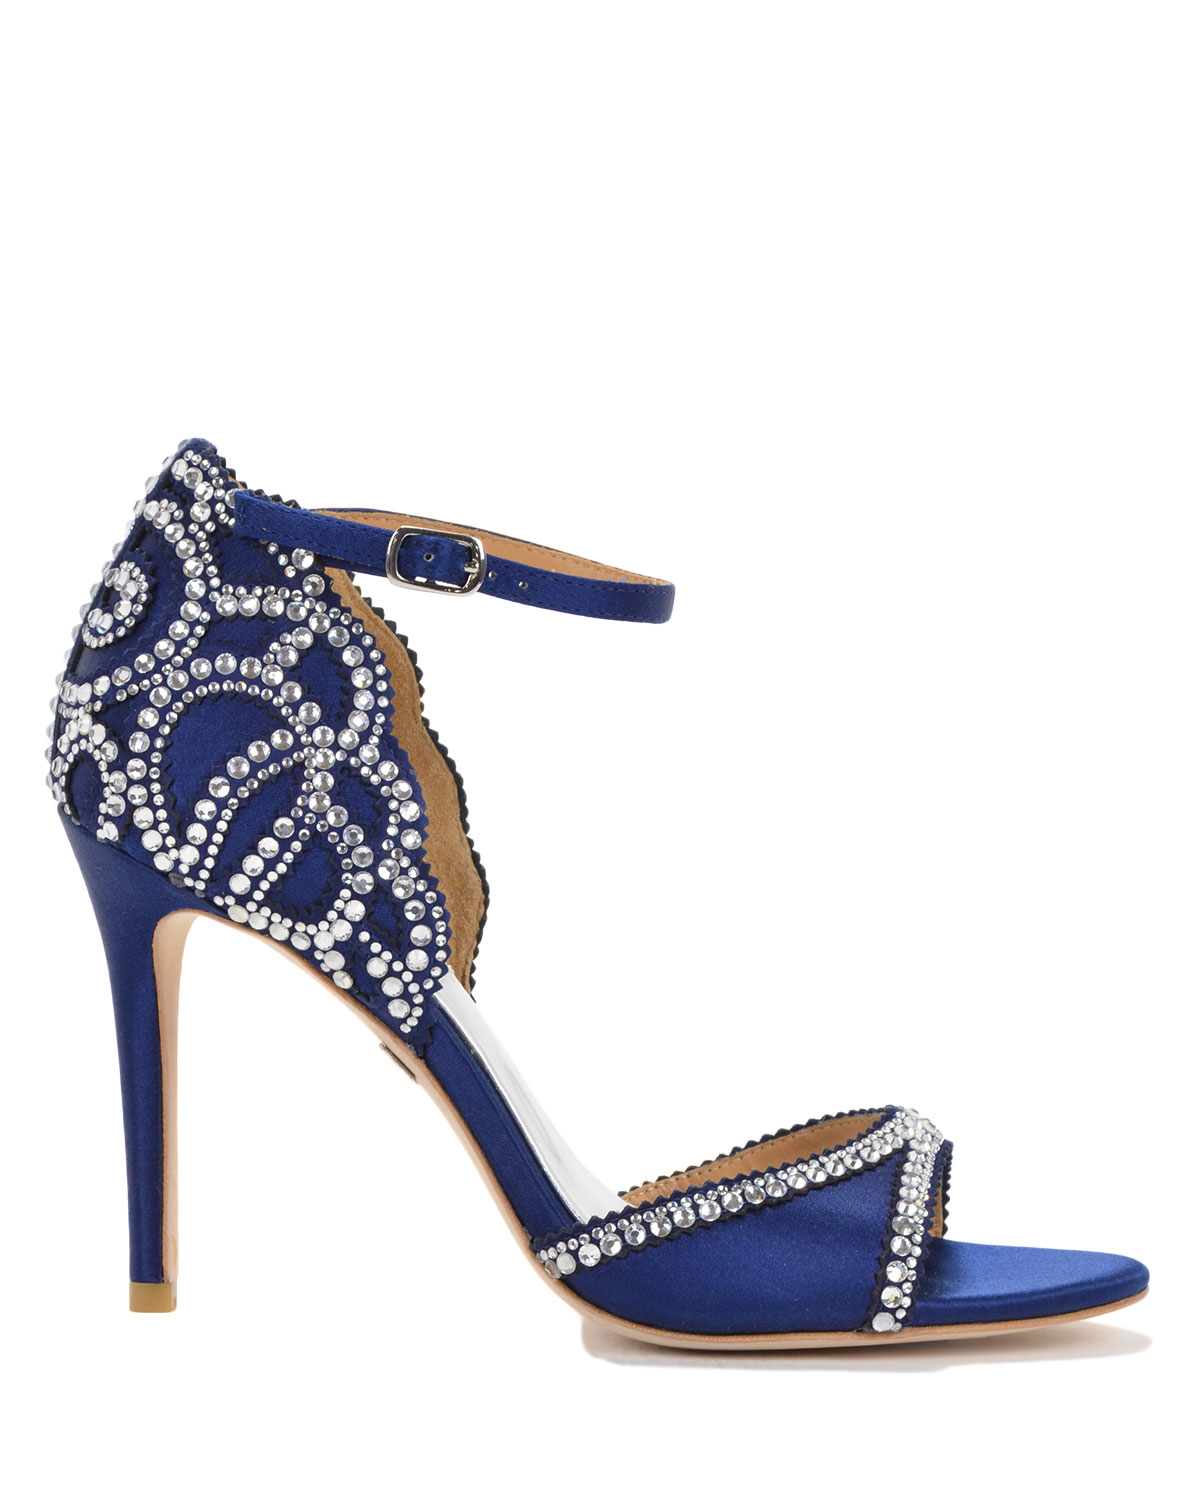 Badgley mischka Roxy Ankle Strap Evening Shoe in Blue (Navy) | Lyst